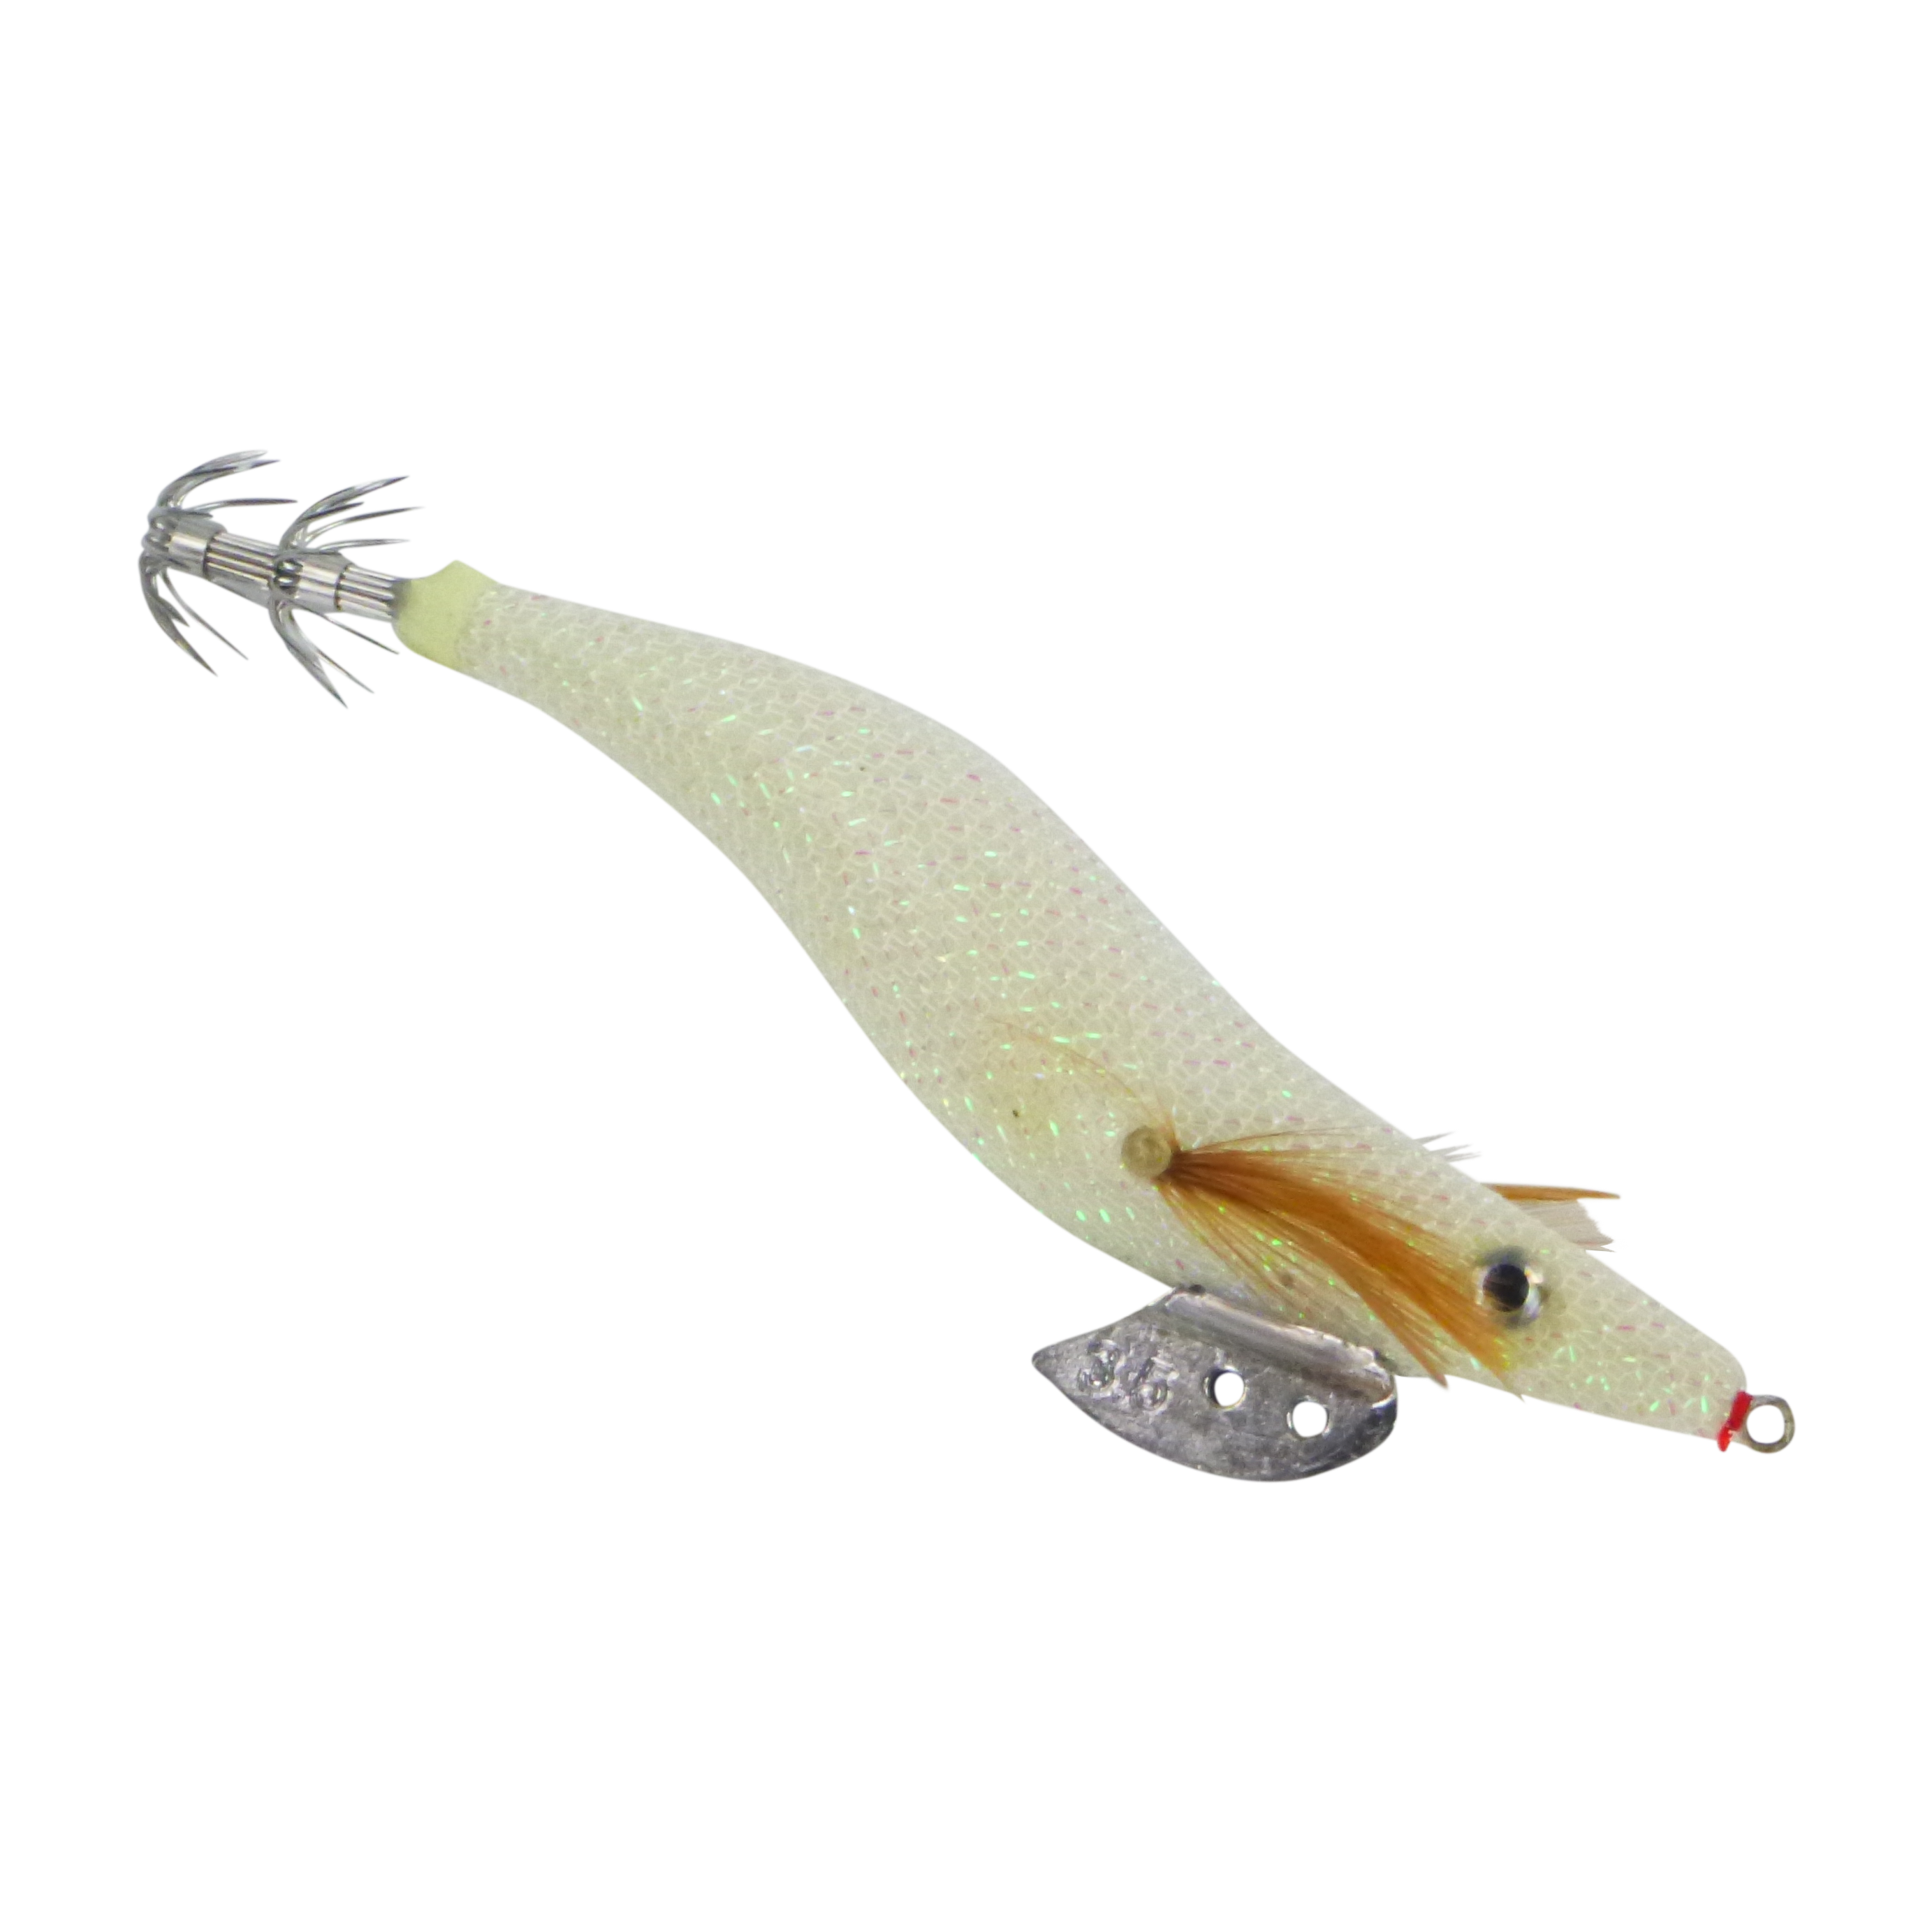 Finesse Rumoika Squid Jig, White Glow, size 3.5, 2 pack